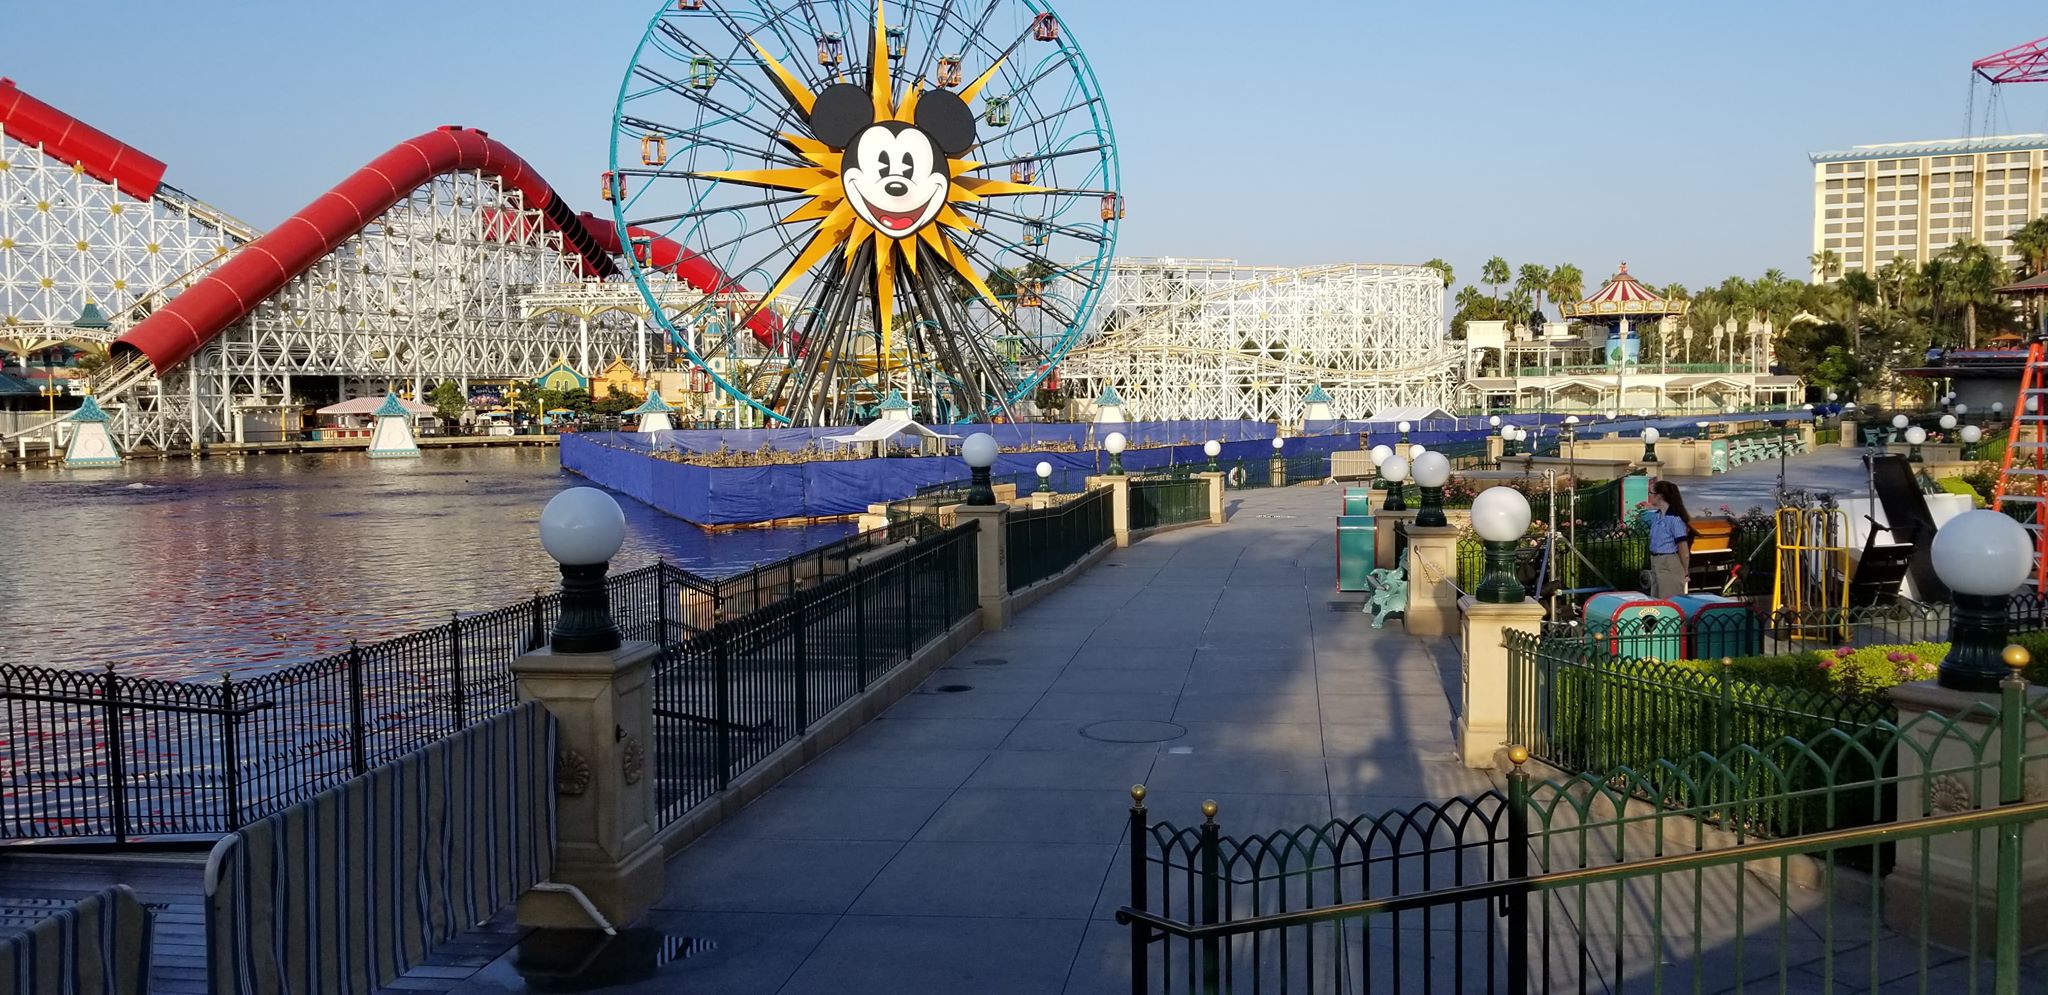 Refurbishment Continues on Disneyland’s World of Color